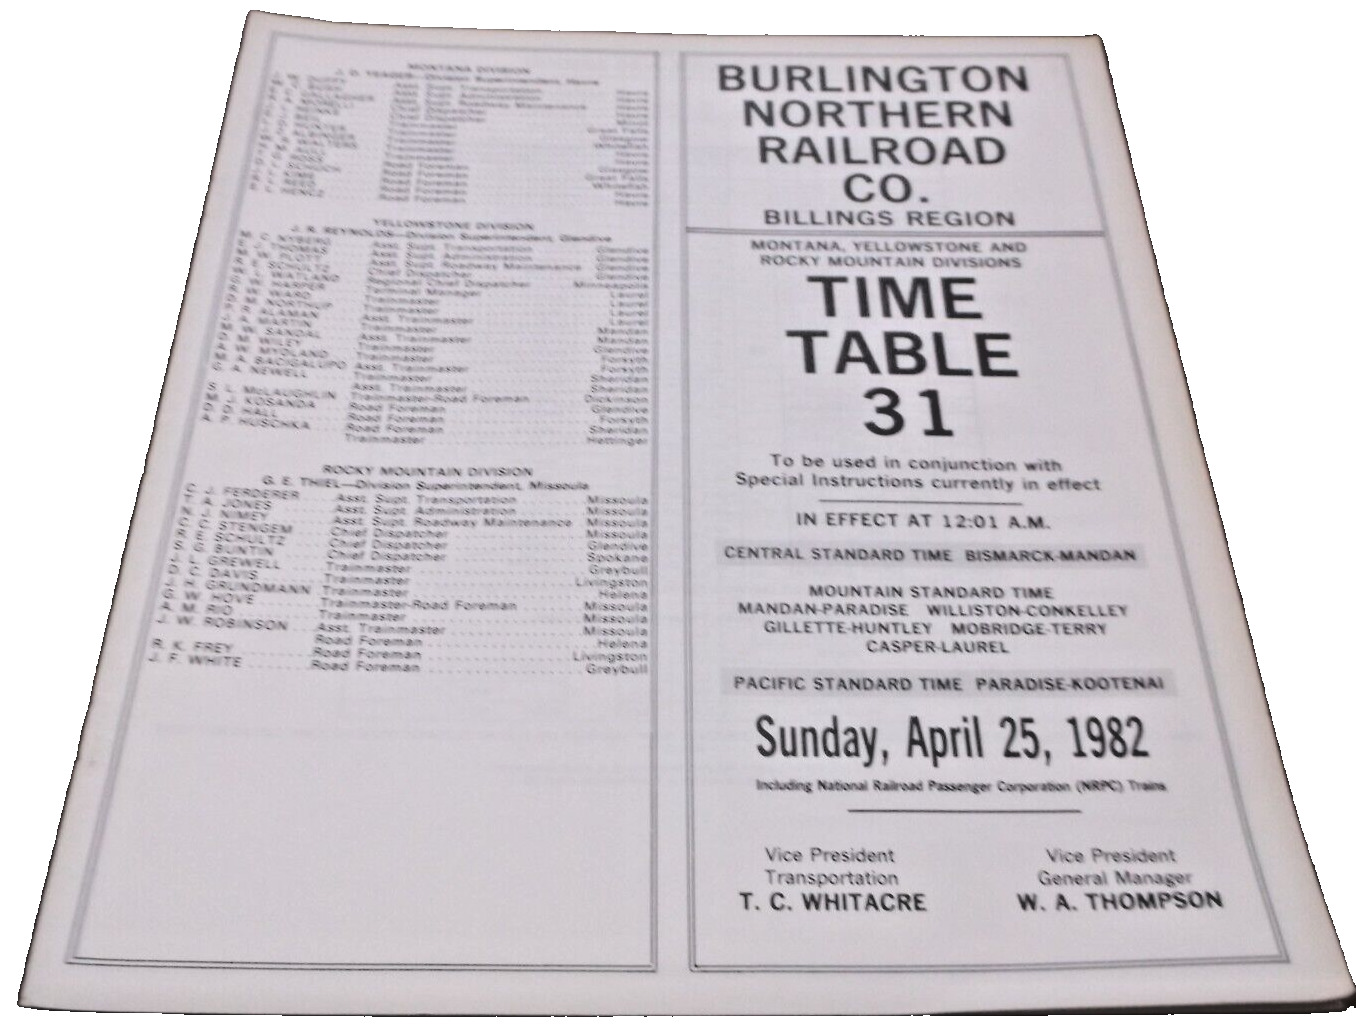 APRIL 1982 BURLINGTON NORTHERN BILLINGS REGION EMPLOYEE TIMETABLE #31